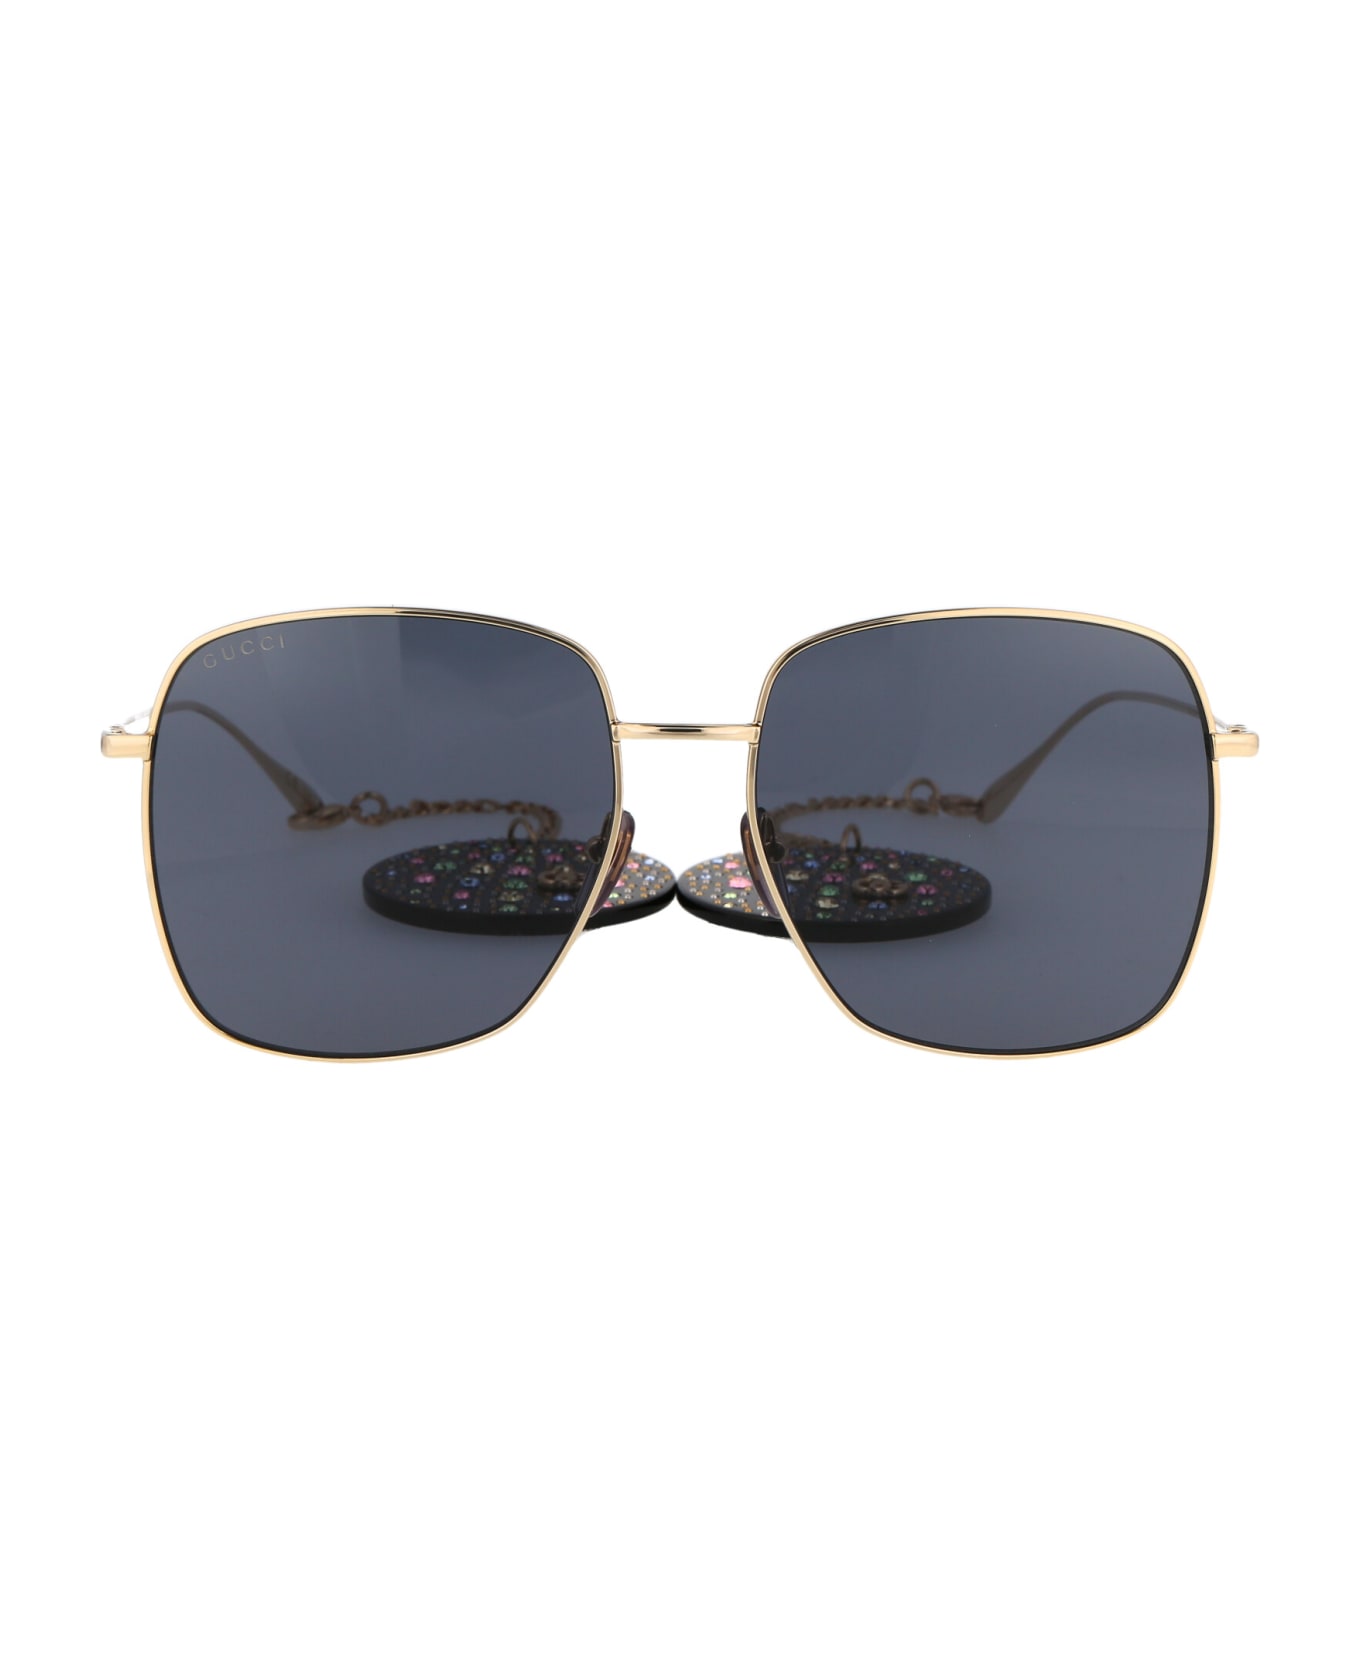 Gucci Eyewear Gg1031s Sunglasses - 009 GOLD GOLD GREY サングラス